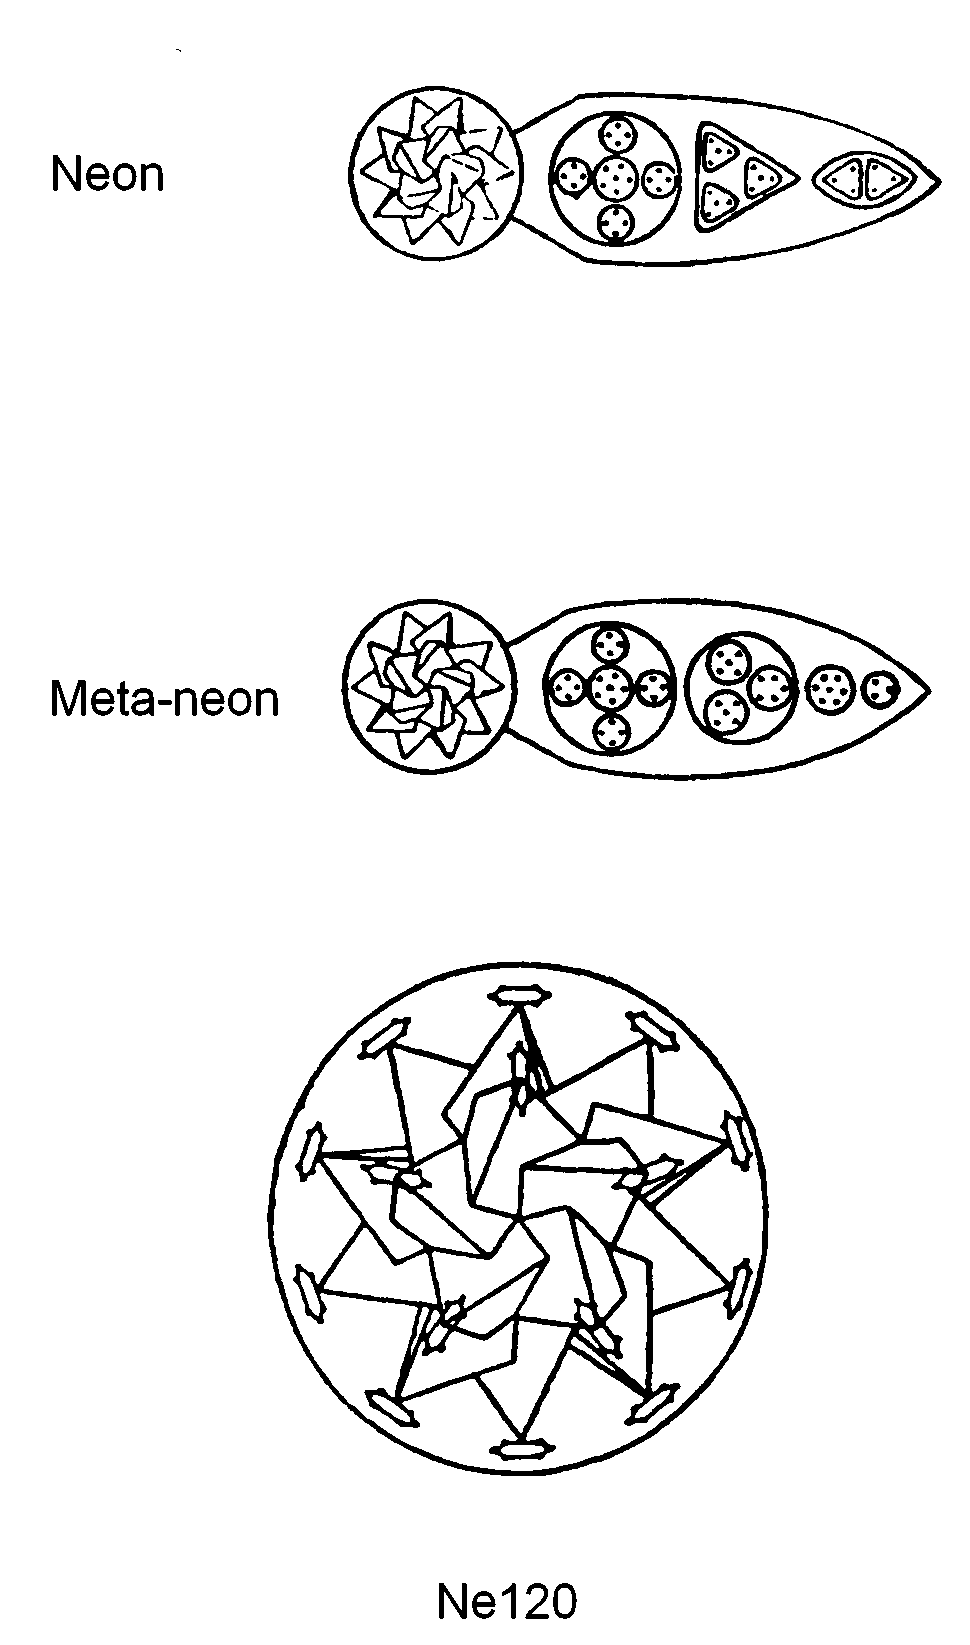 Neon MPA